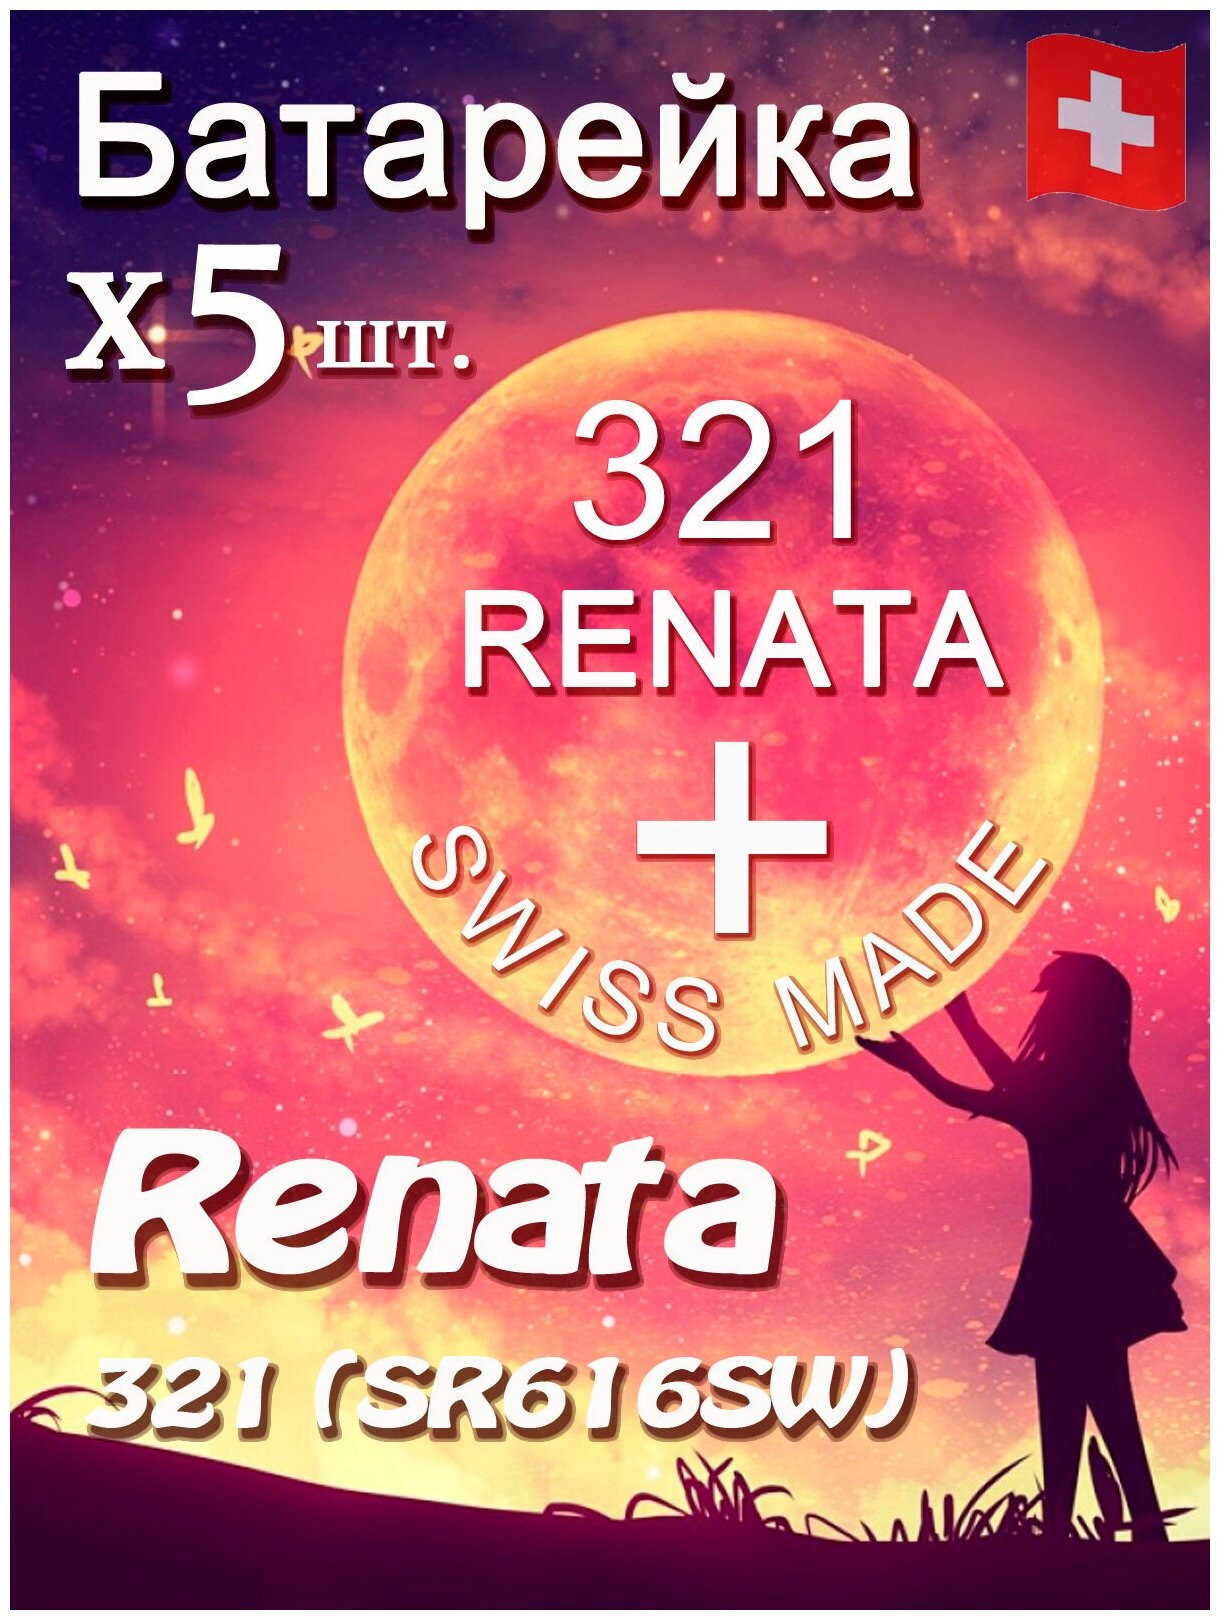 Батарейка Renata 321 5шт/Элемент питания рената 321 В10 (SR616SW)(без ртути) 5шт